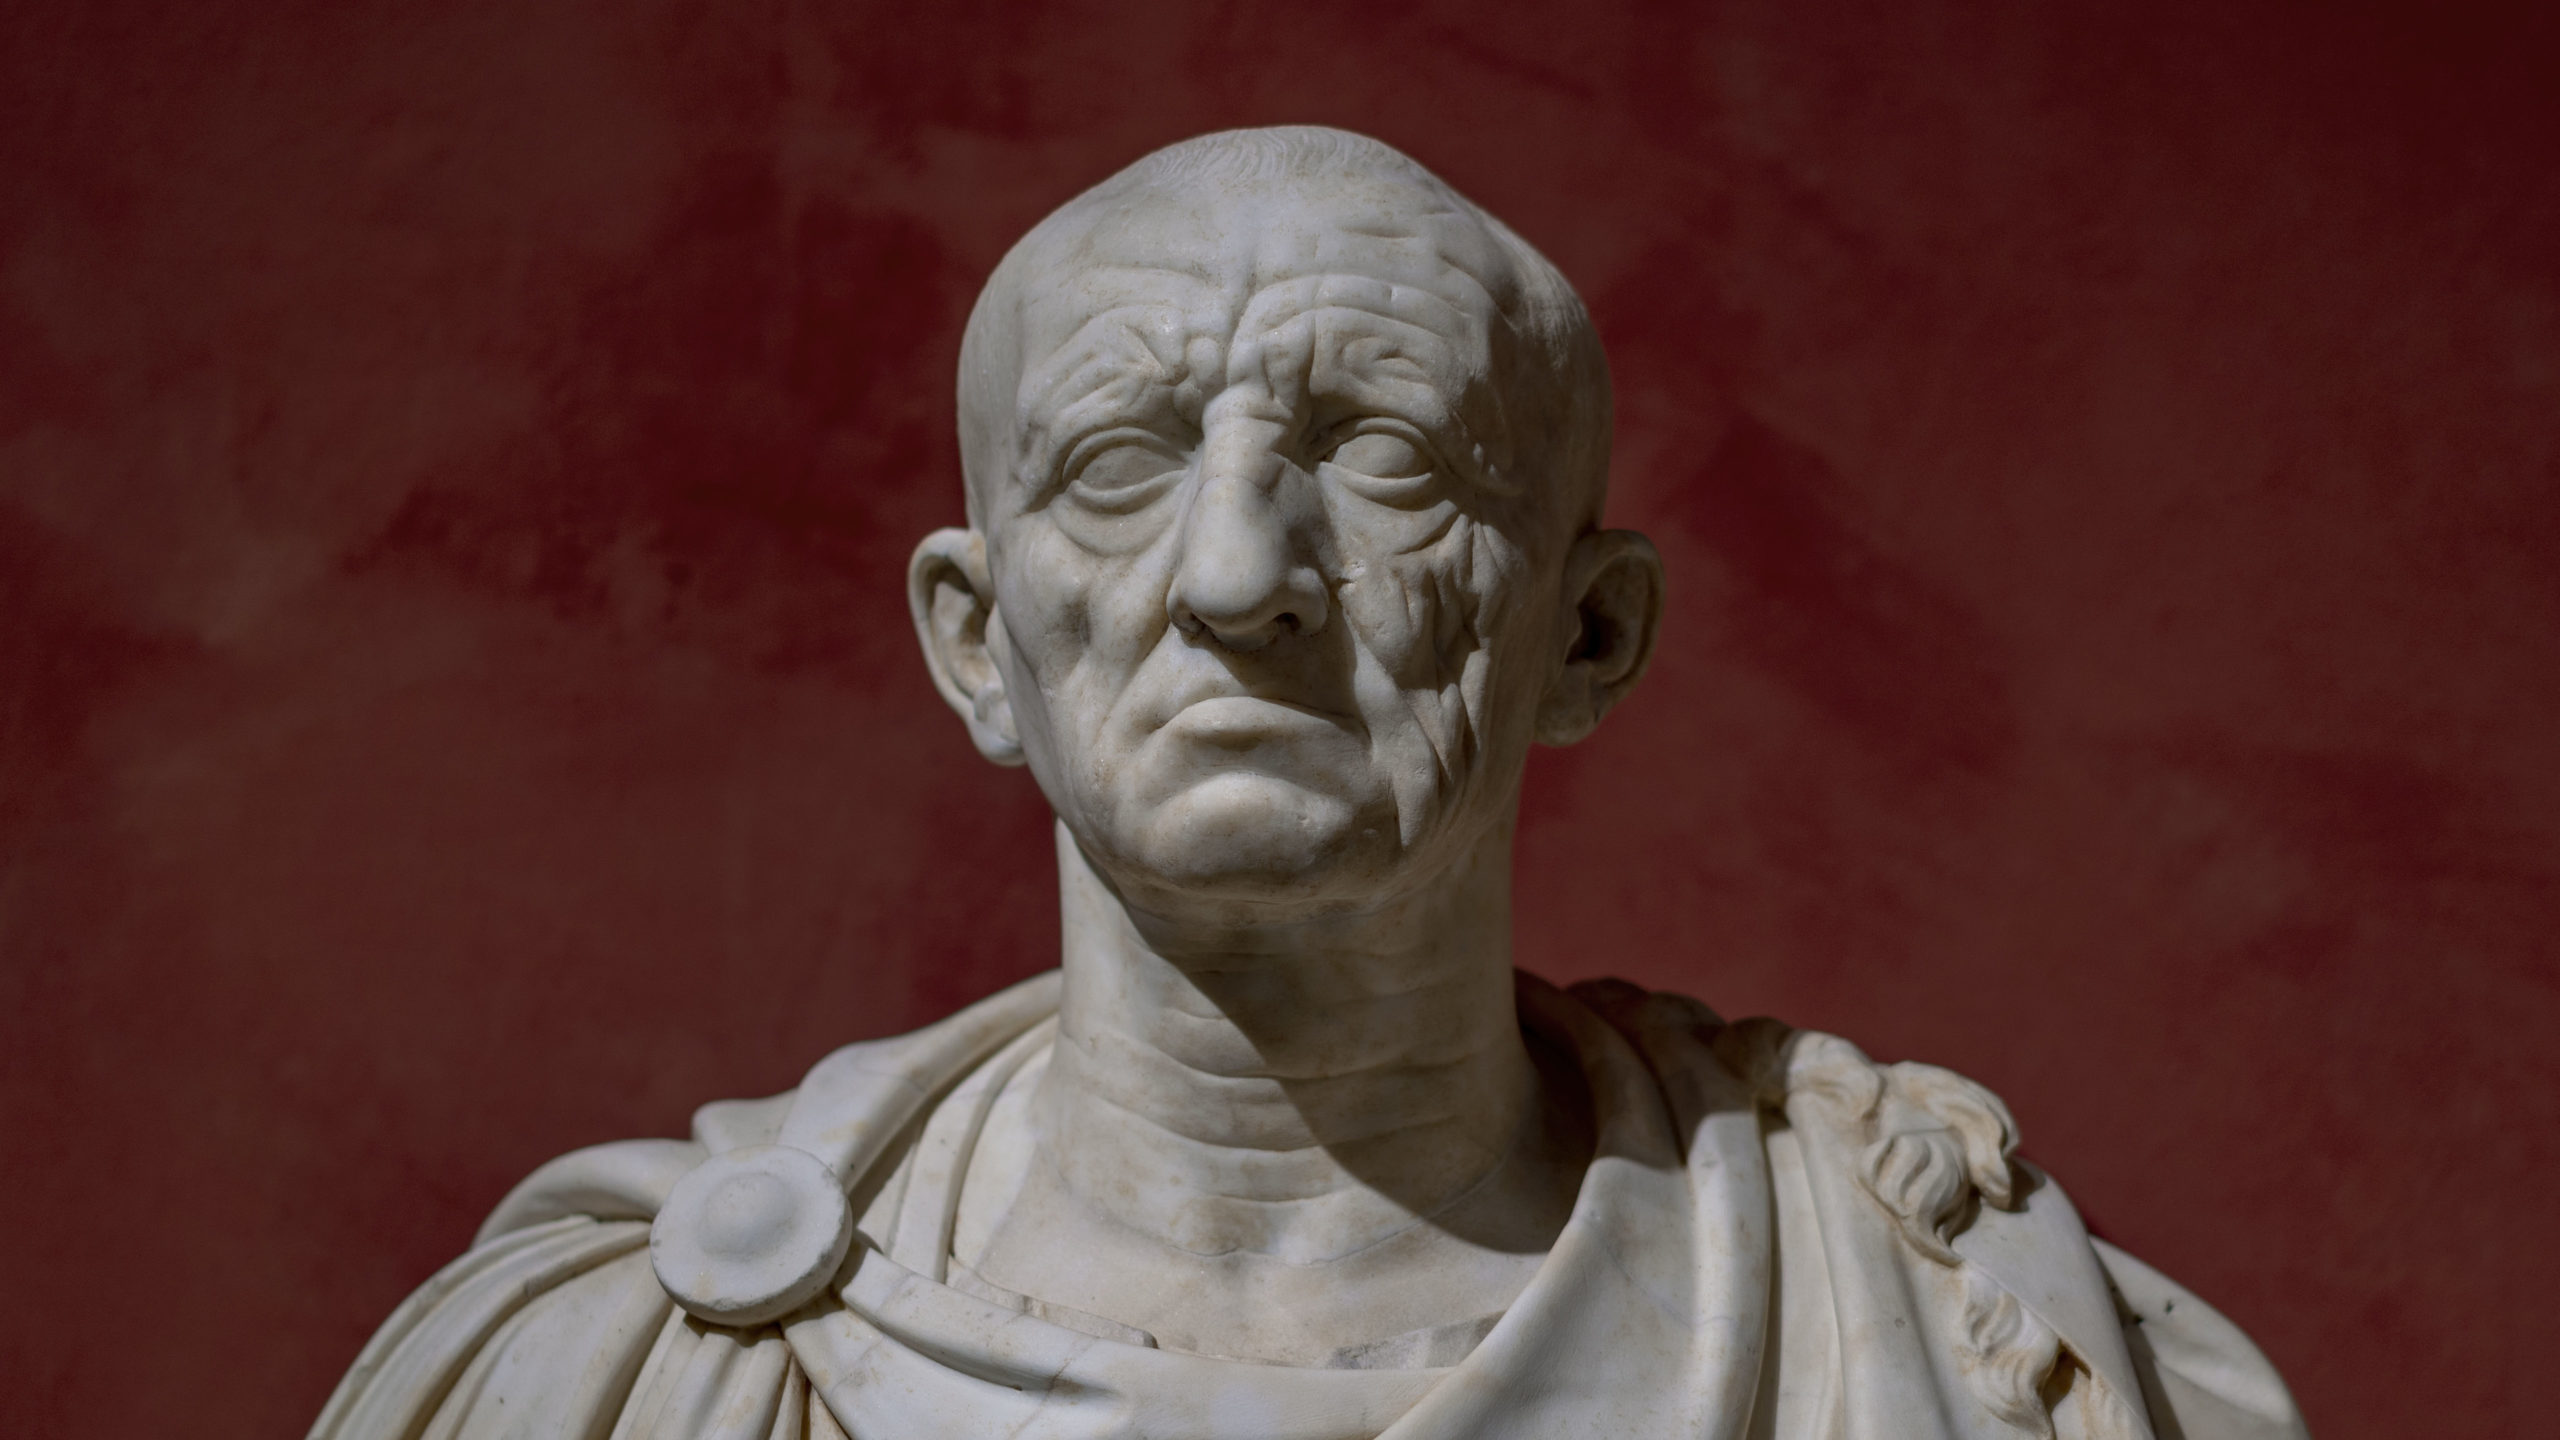 portrait bust of a roman man